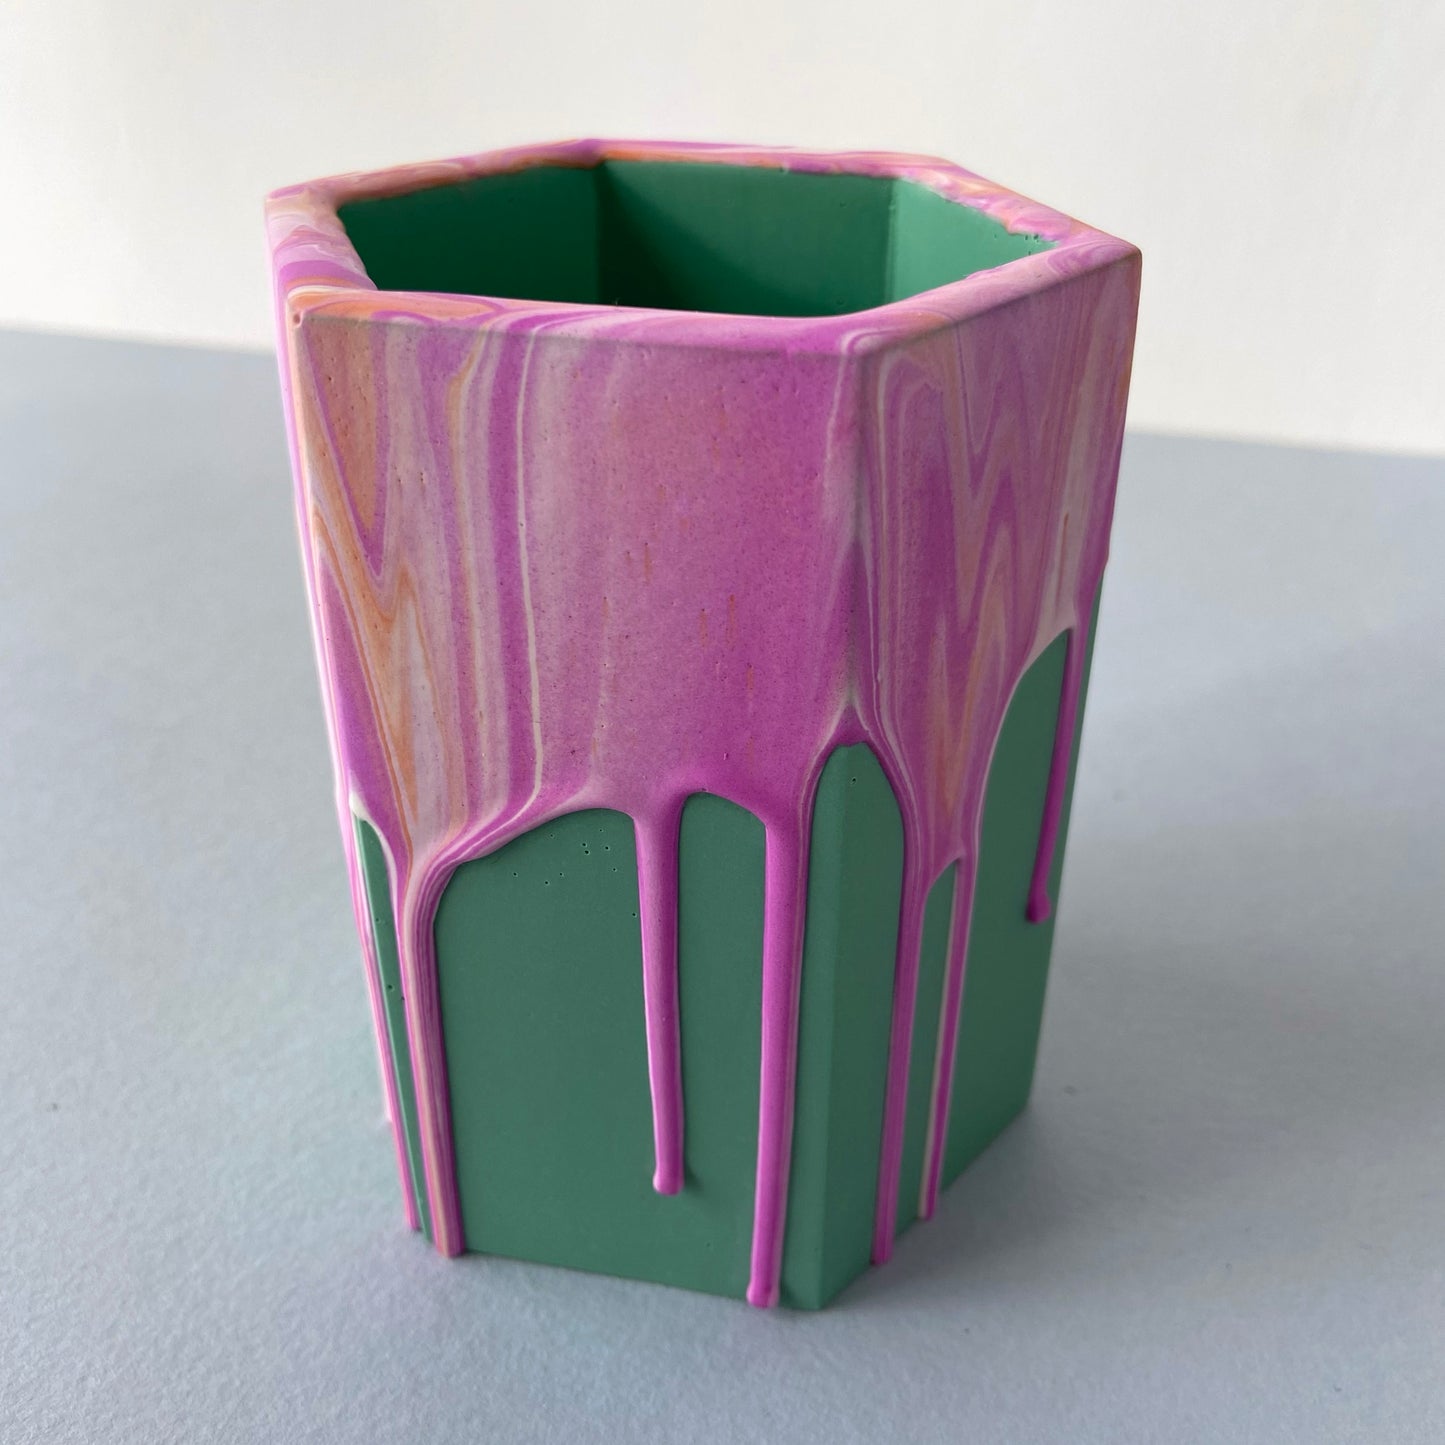 Hexagon pen pot / dried flower vase in drippy pink + coral